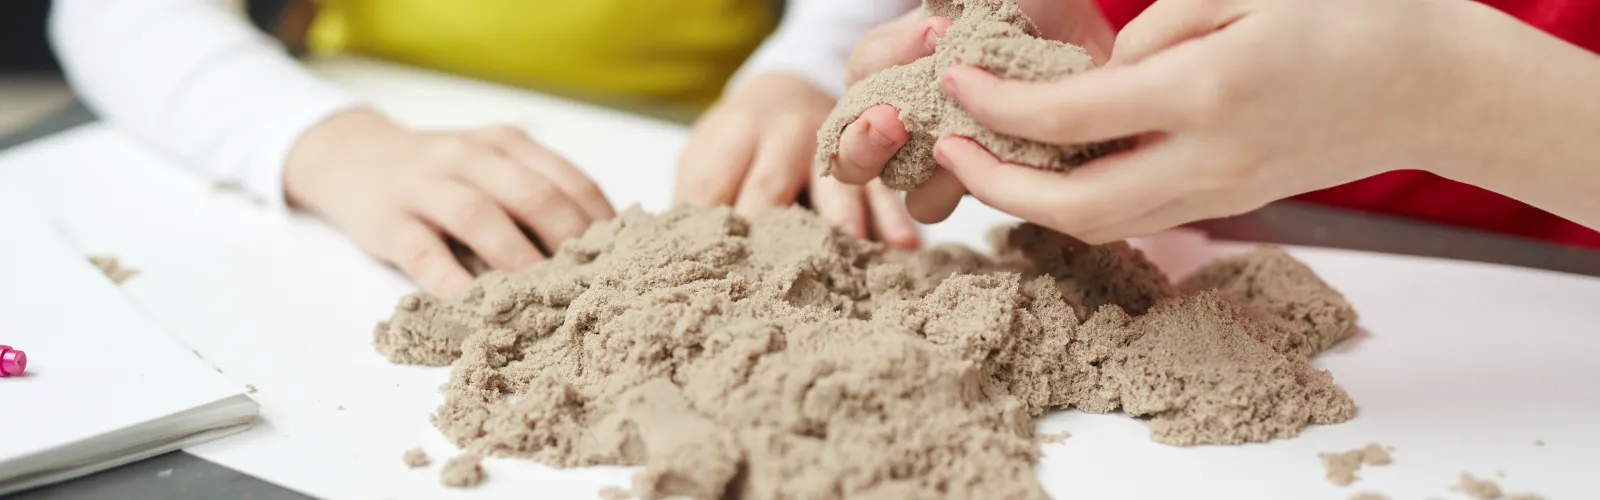 natural kinetic sand craft